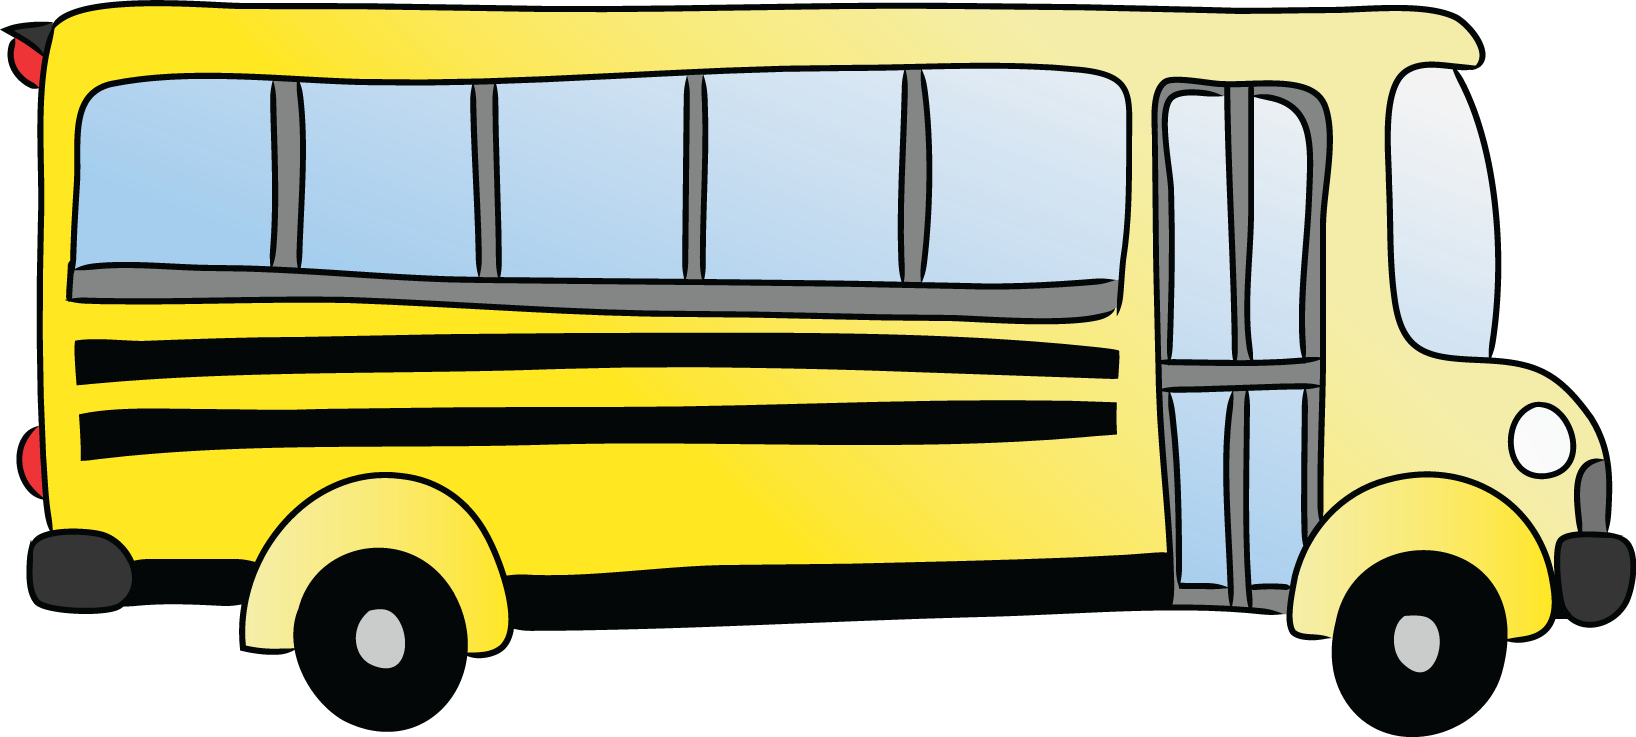 School bus drawing.